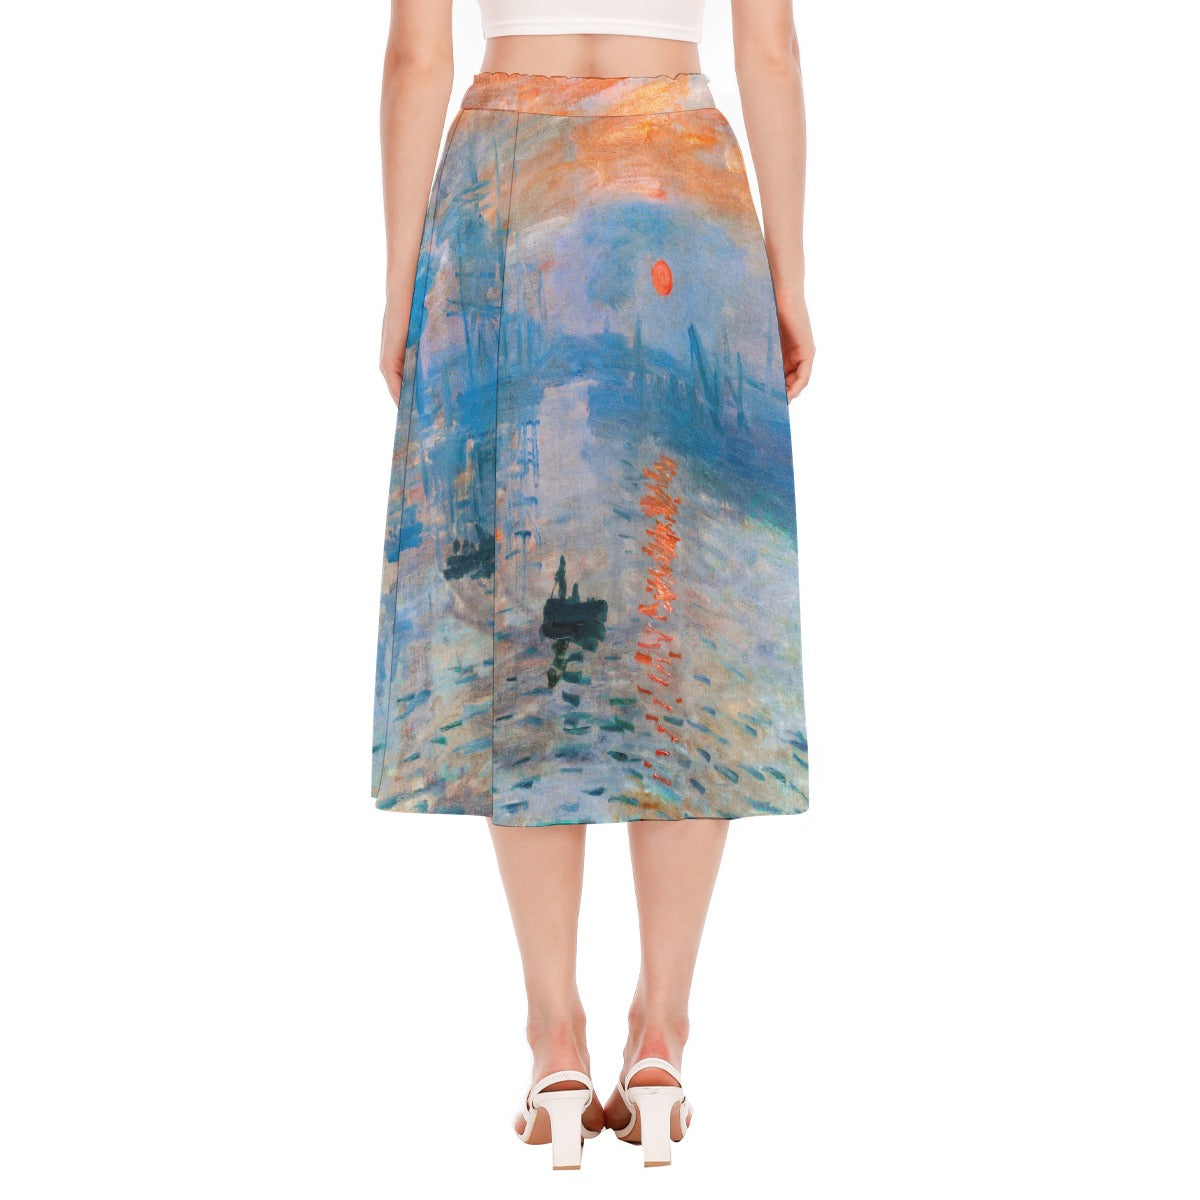 Claude Monet-inspired wearable art piece